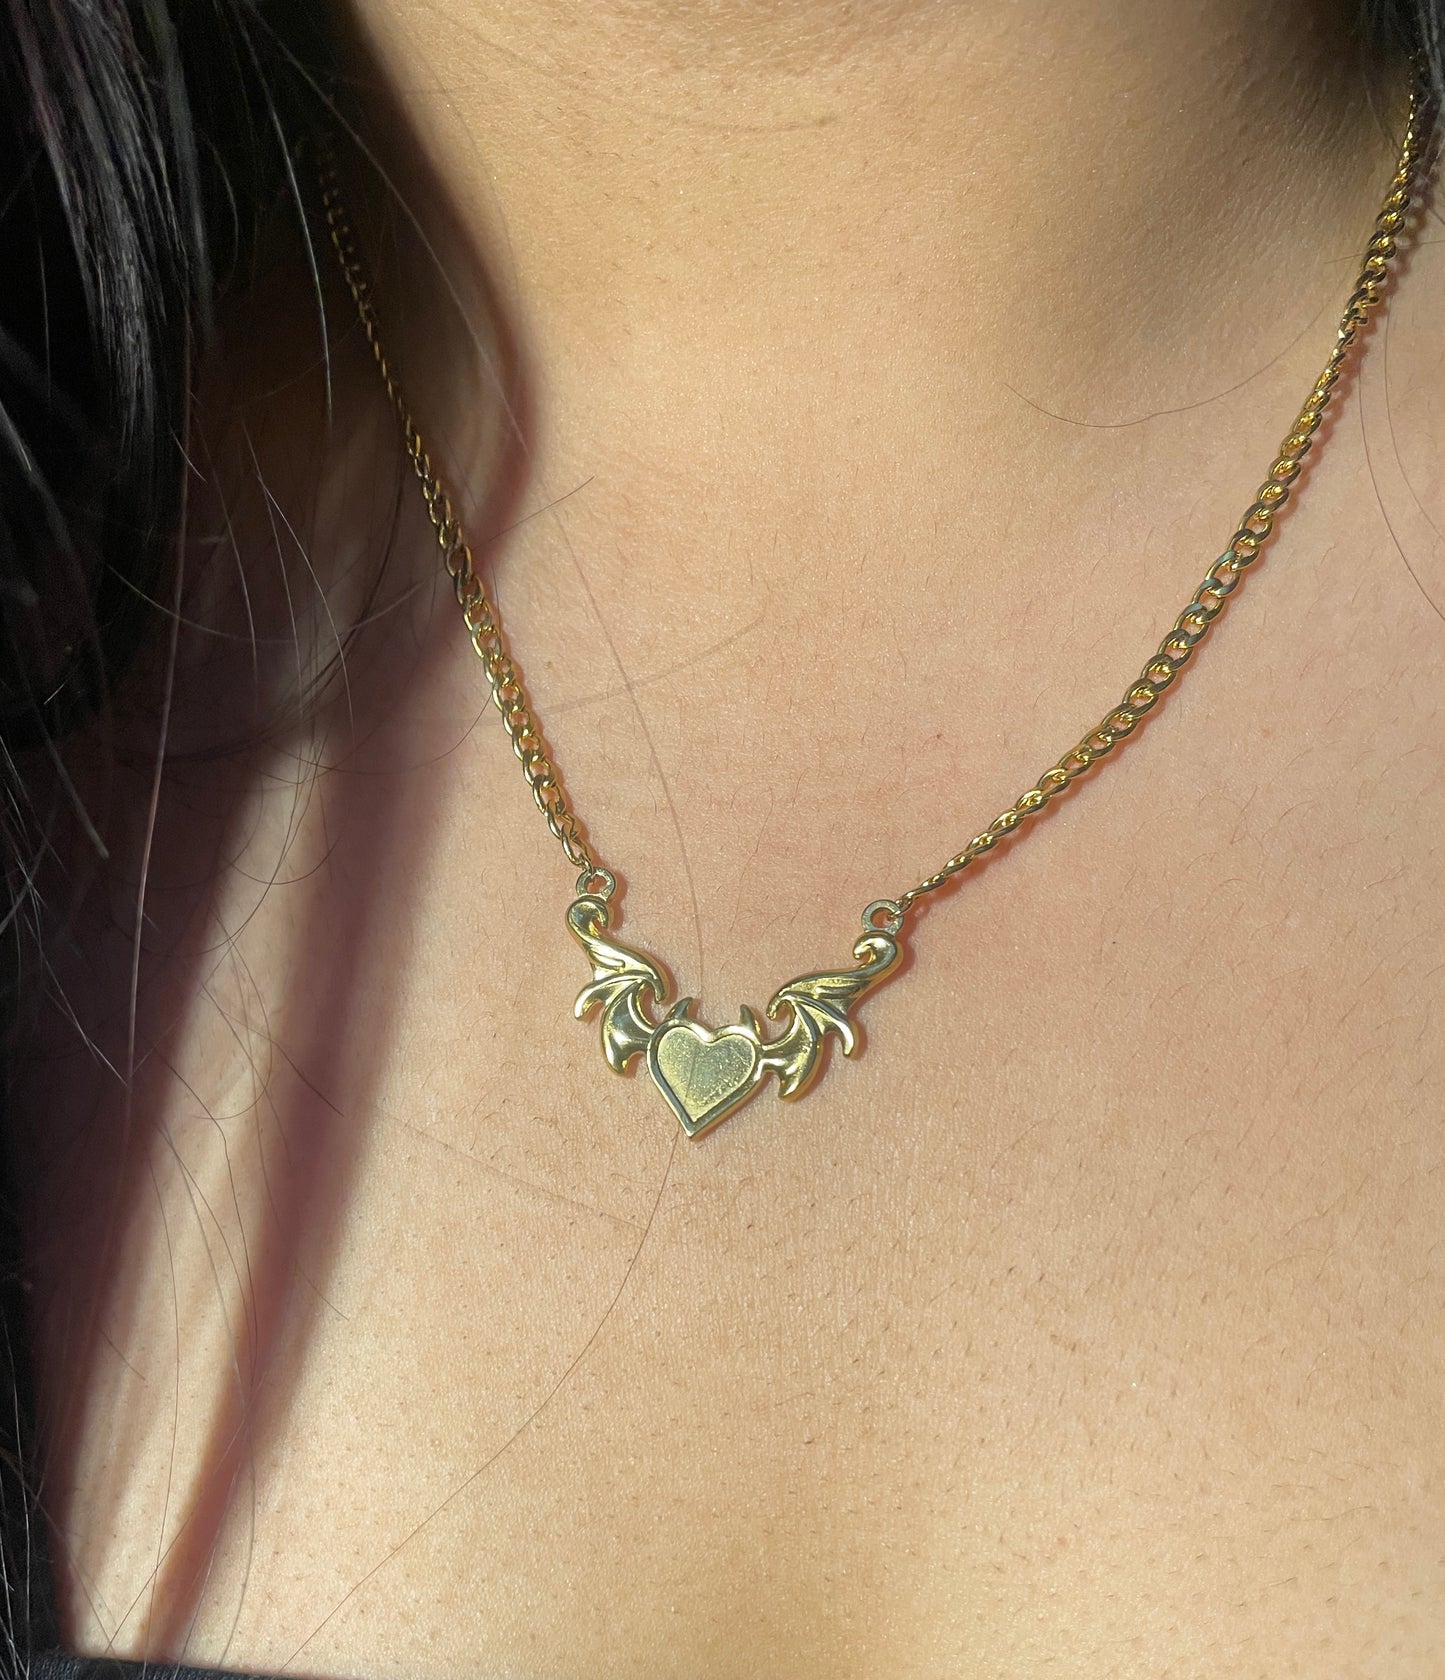 Evil heart necklace